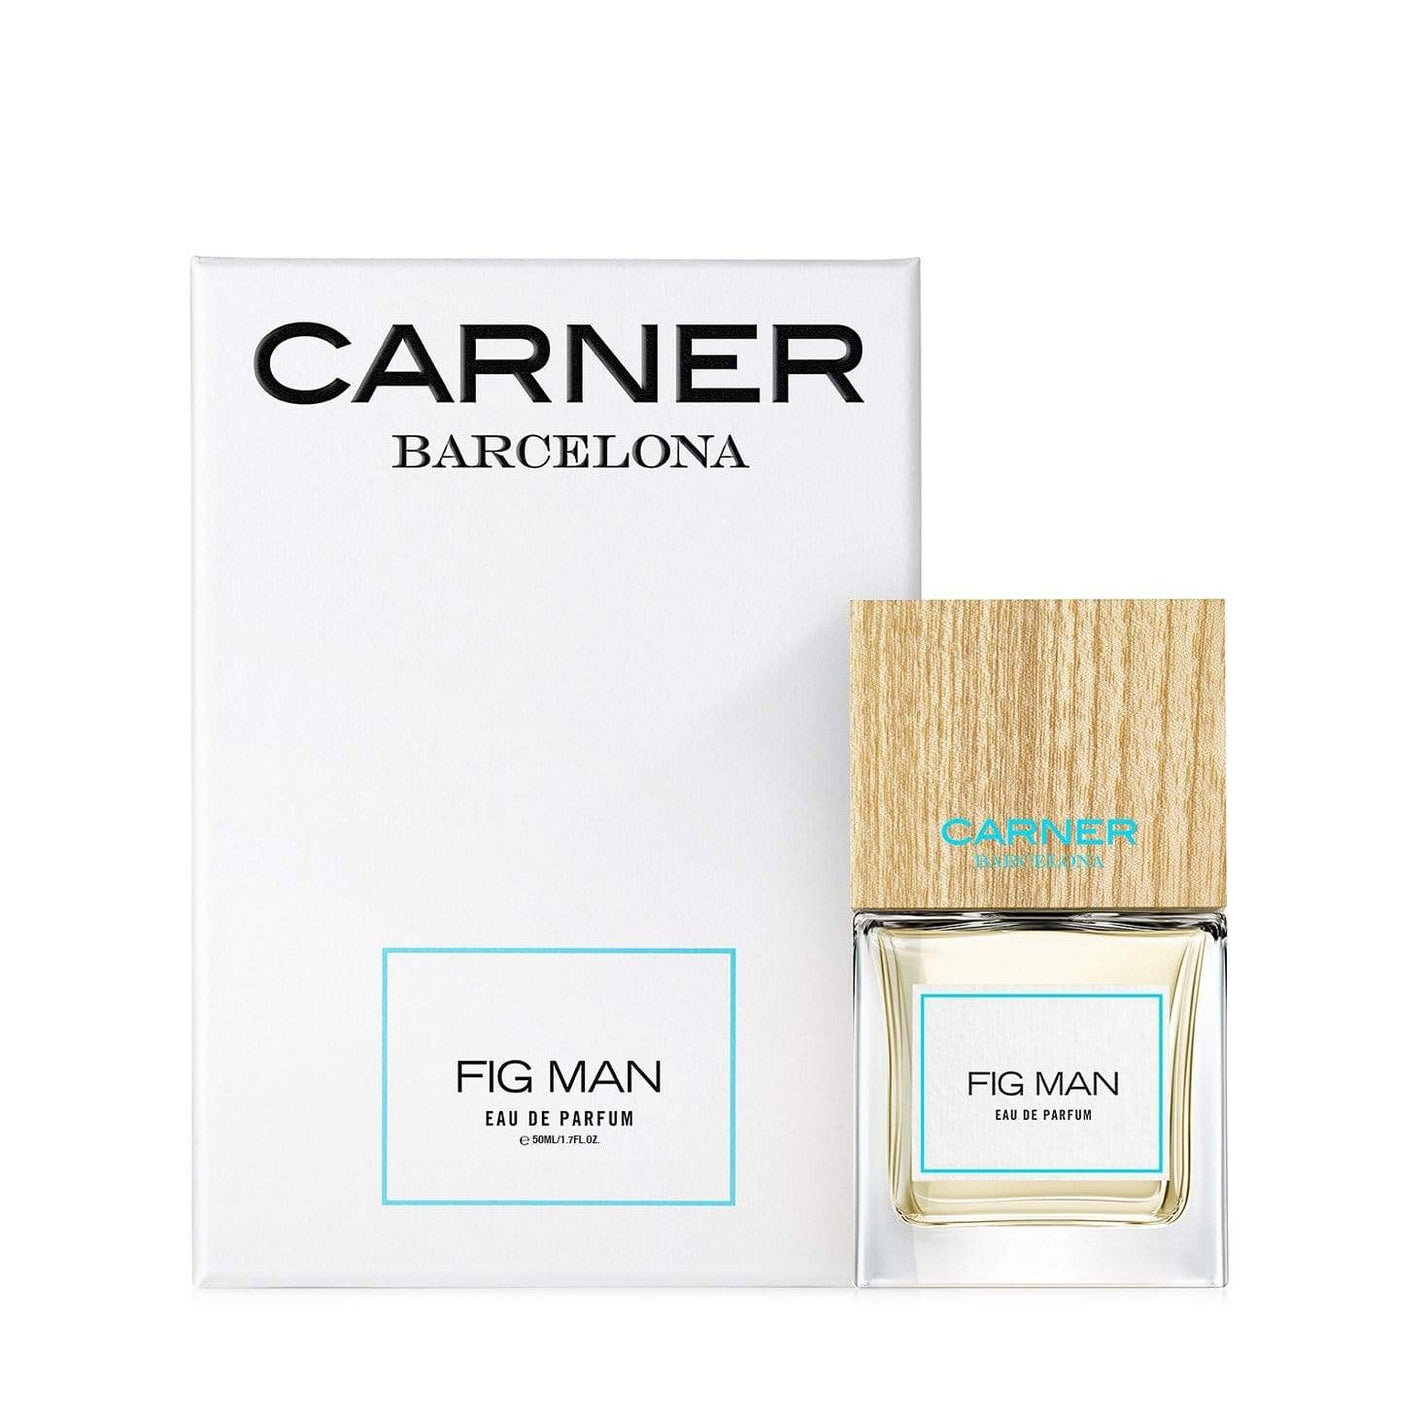 CARNER BARCELONA Fig Man Eau de Parfum - 50ml